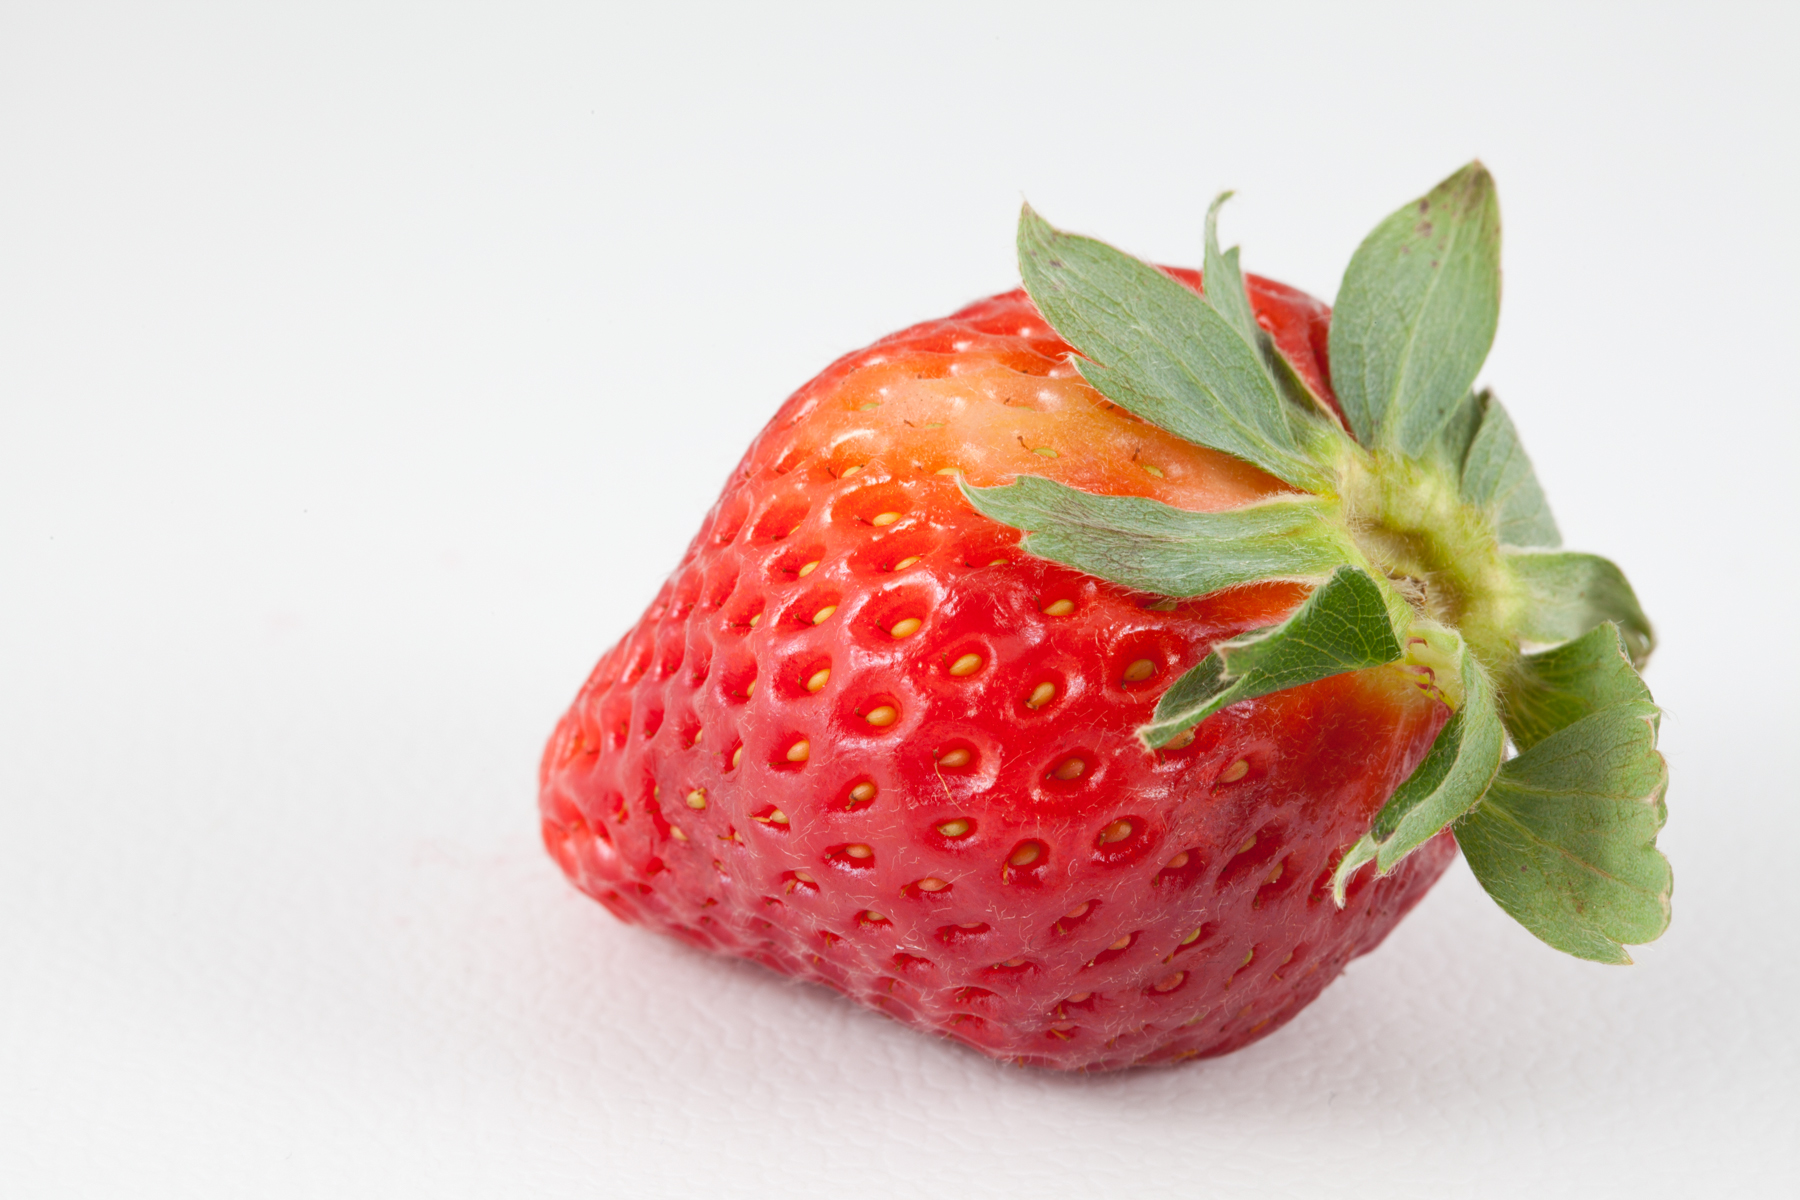 Strawberry close-up photo